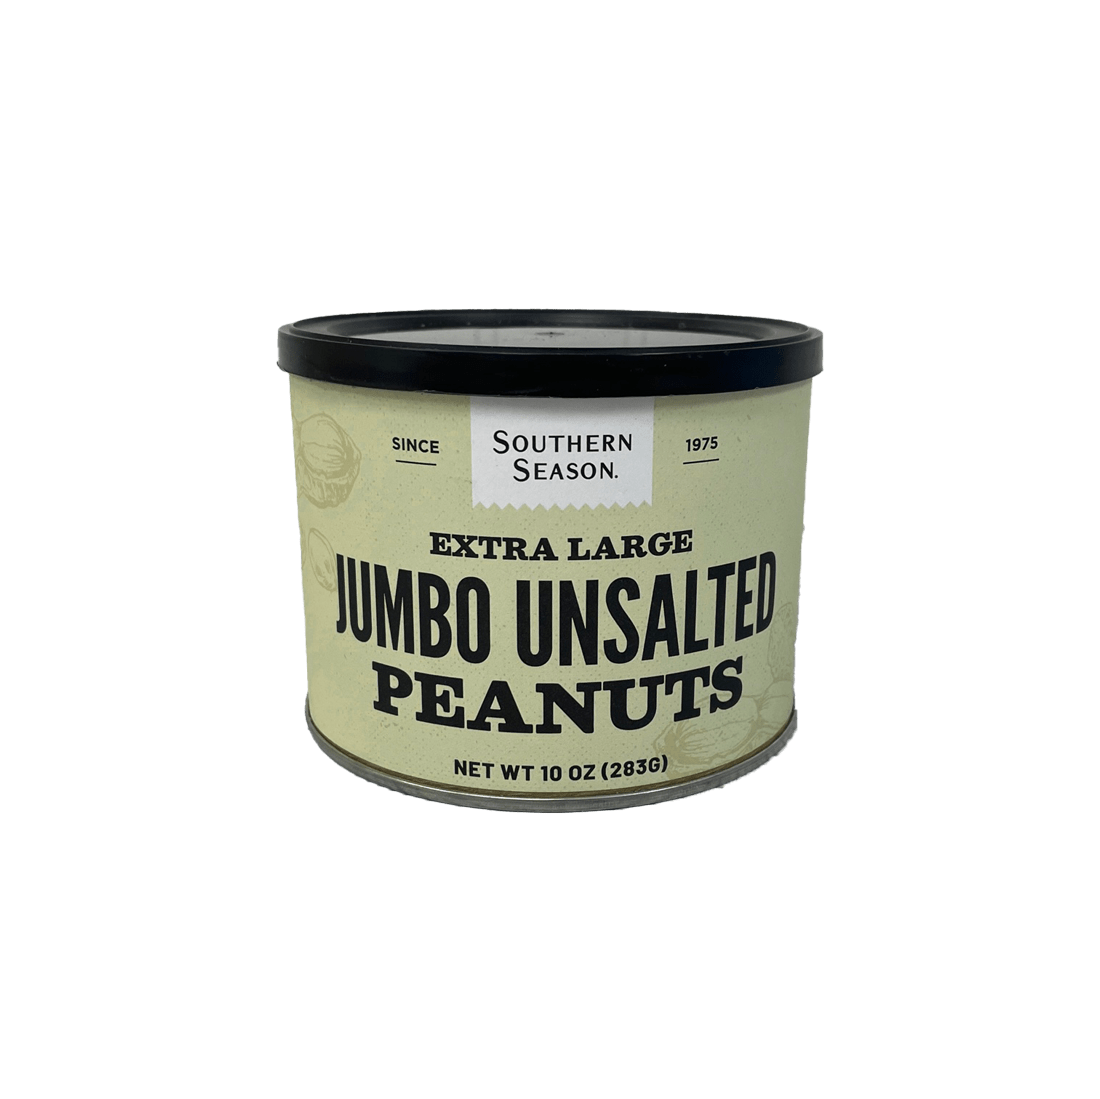 Southern Season Southern Season Jumbo Unsalted Peanuts 10 oz